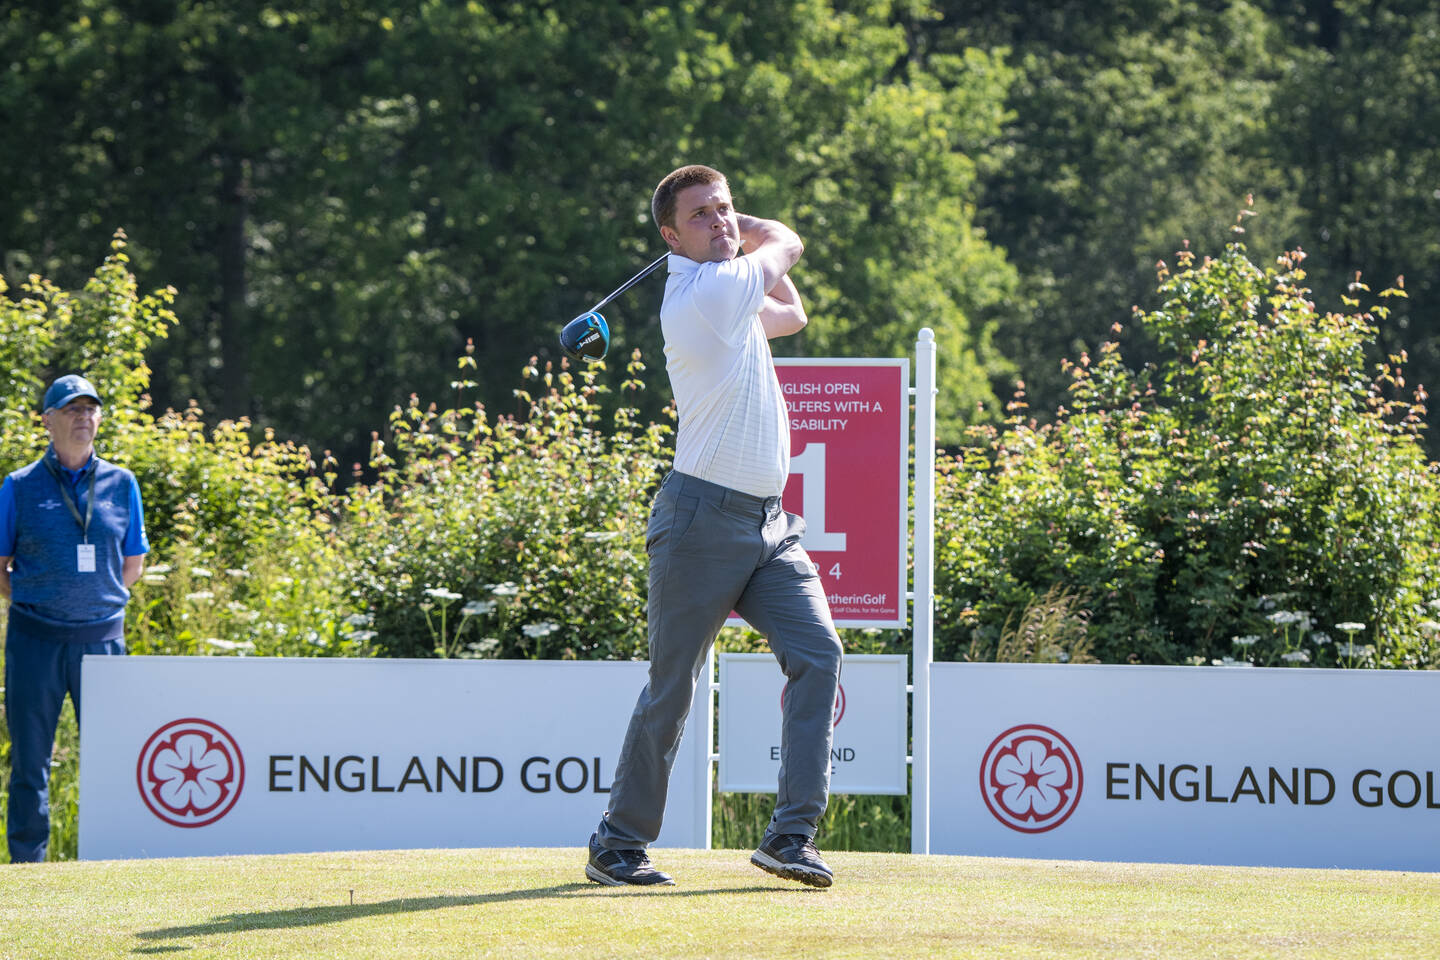 Glad græs karakterisere Activity Alliance: England Golf to field teams at Euro events